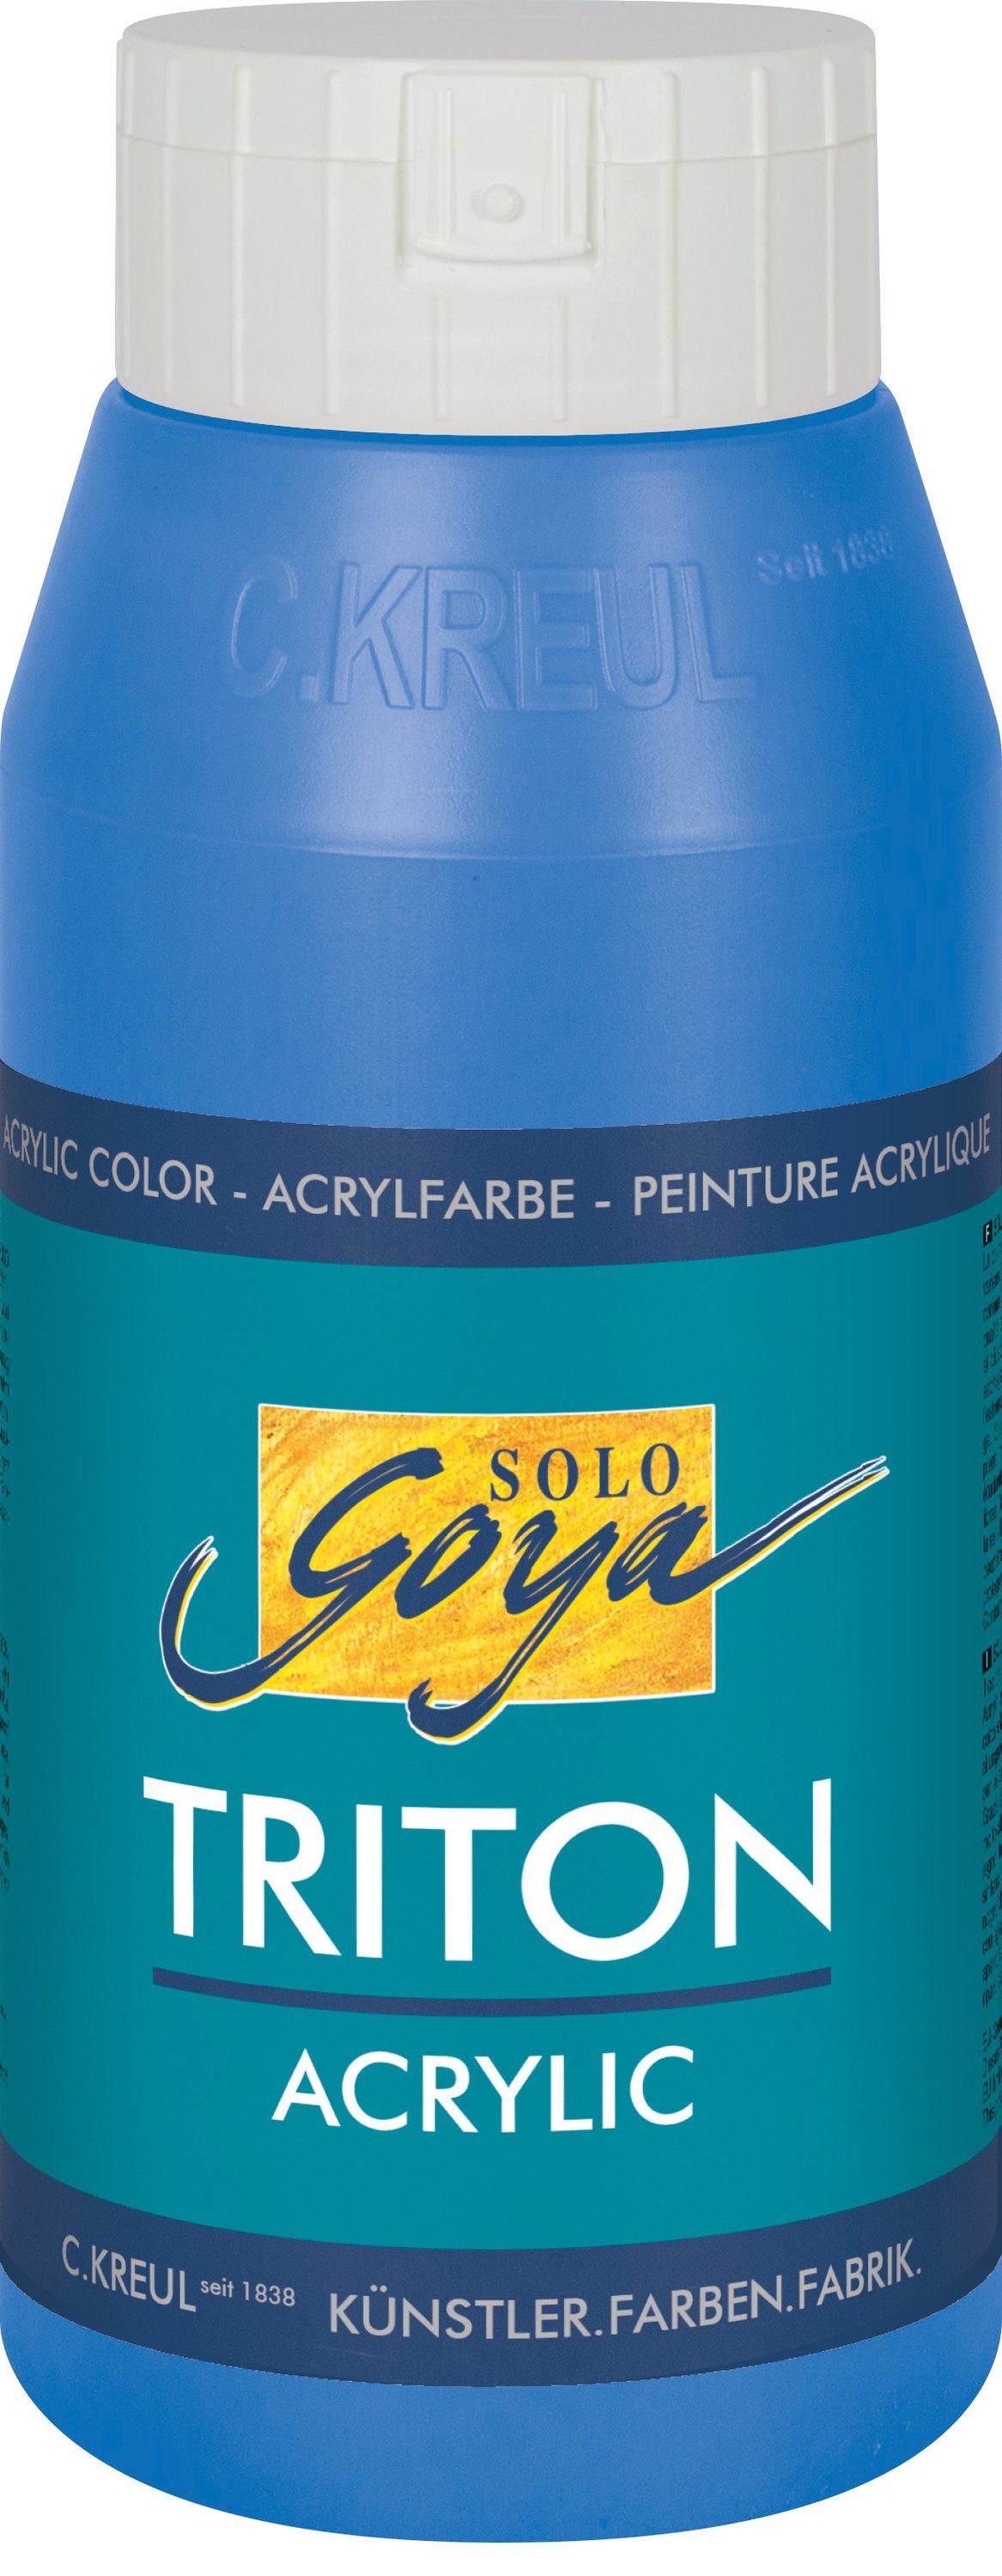 Acrylic, Solo Primärblau Kreul 750 Acrylfarbe ml Triton Goya